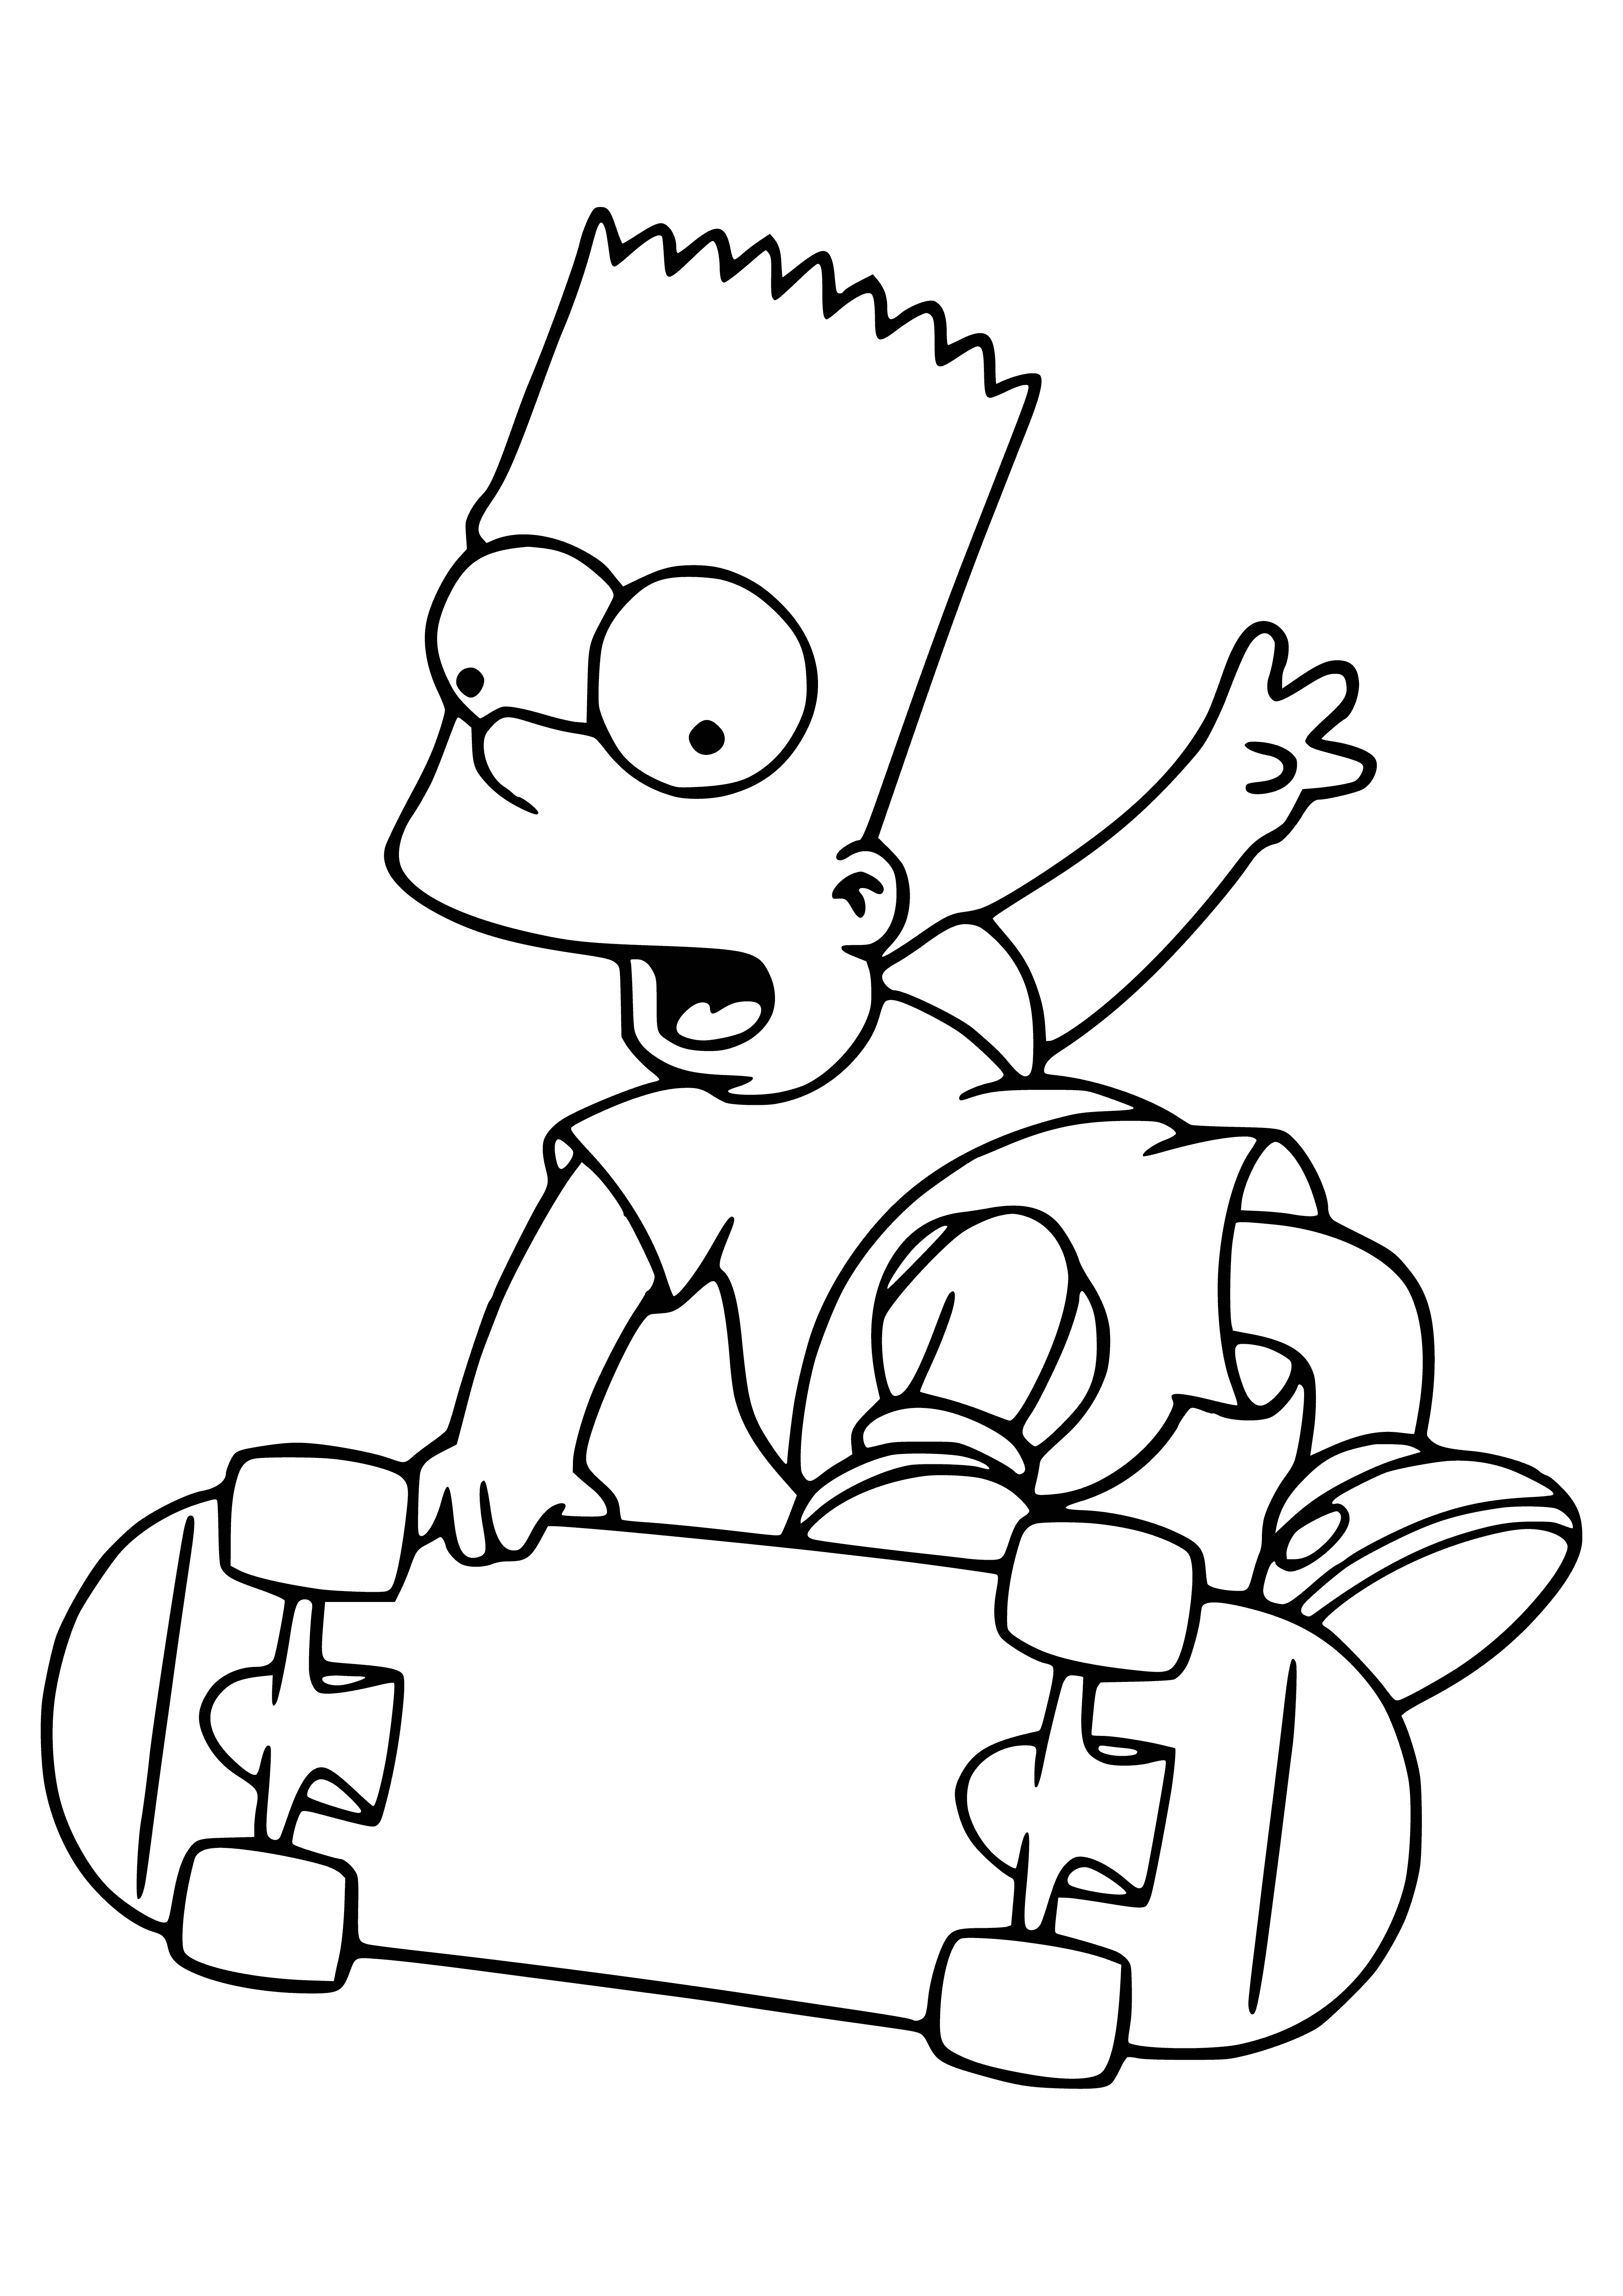 Раскраска 12 крутая. Барт симпсон на скейте. Раскрашенный симпсон барт симпсон. Барт симпсон раскраска. Раскраски симпсон барт симпсон.